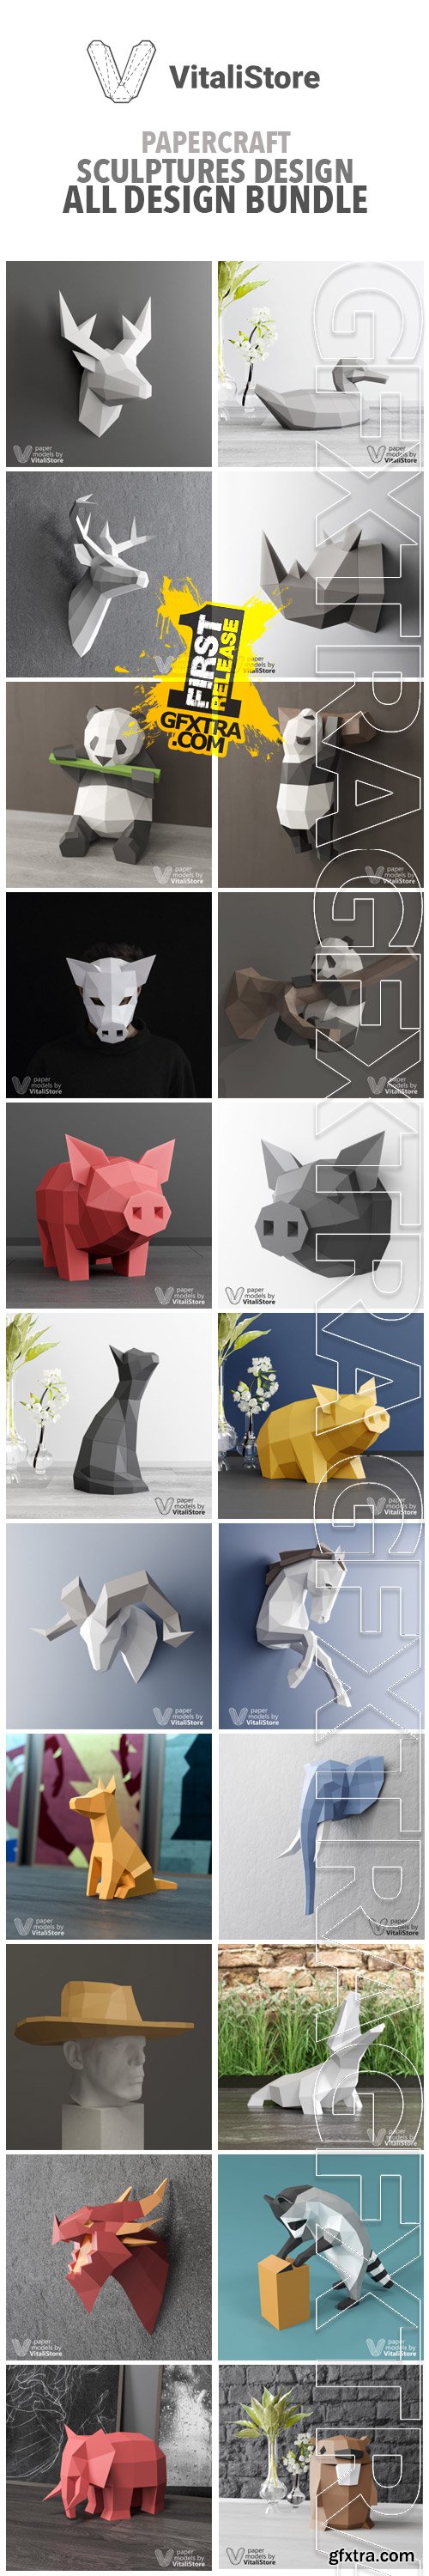 VitaliStore - All Design Bundle $300 - Papercraft Sculptures Design